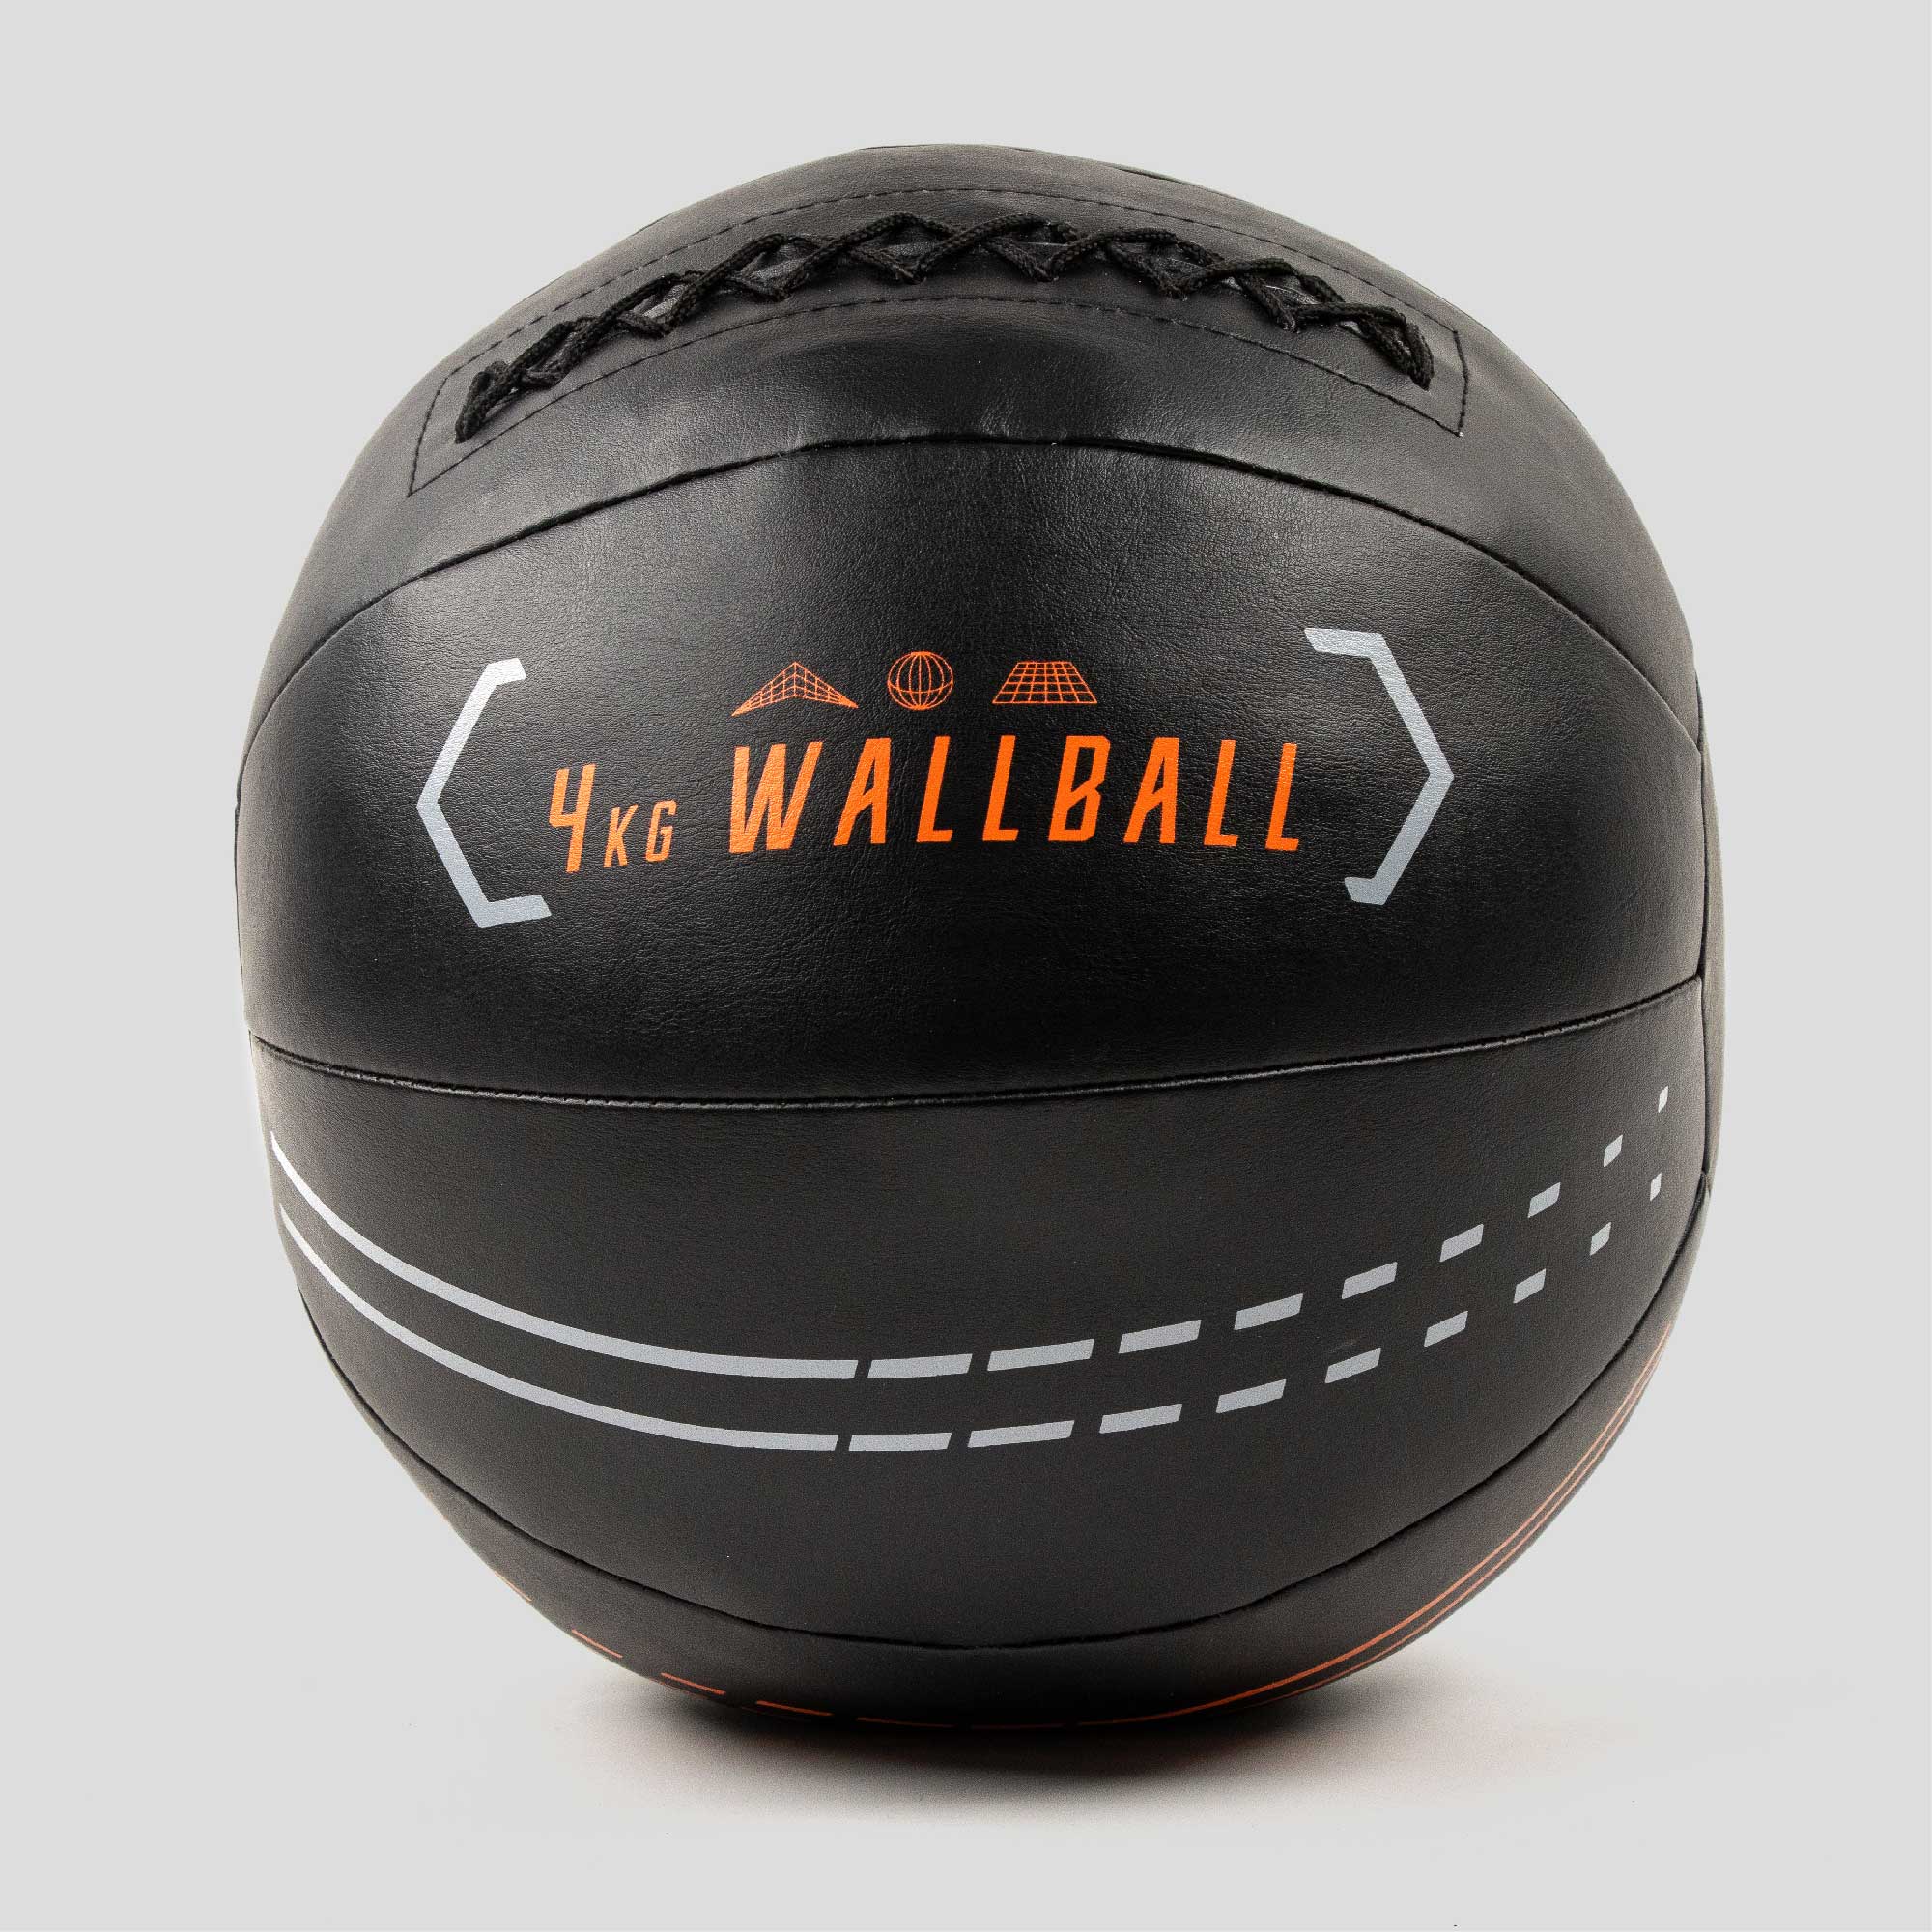 Wall Ball - 4kg